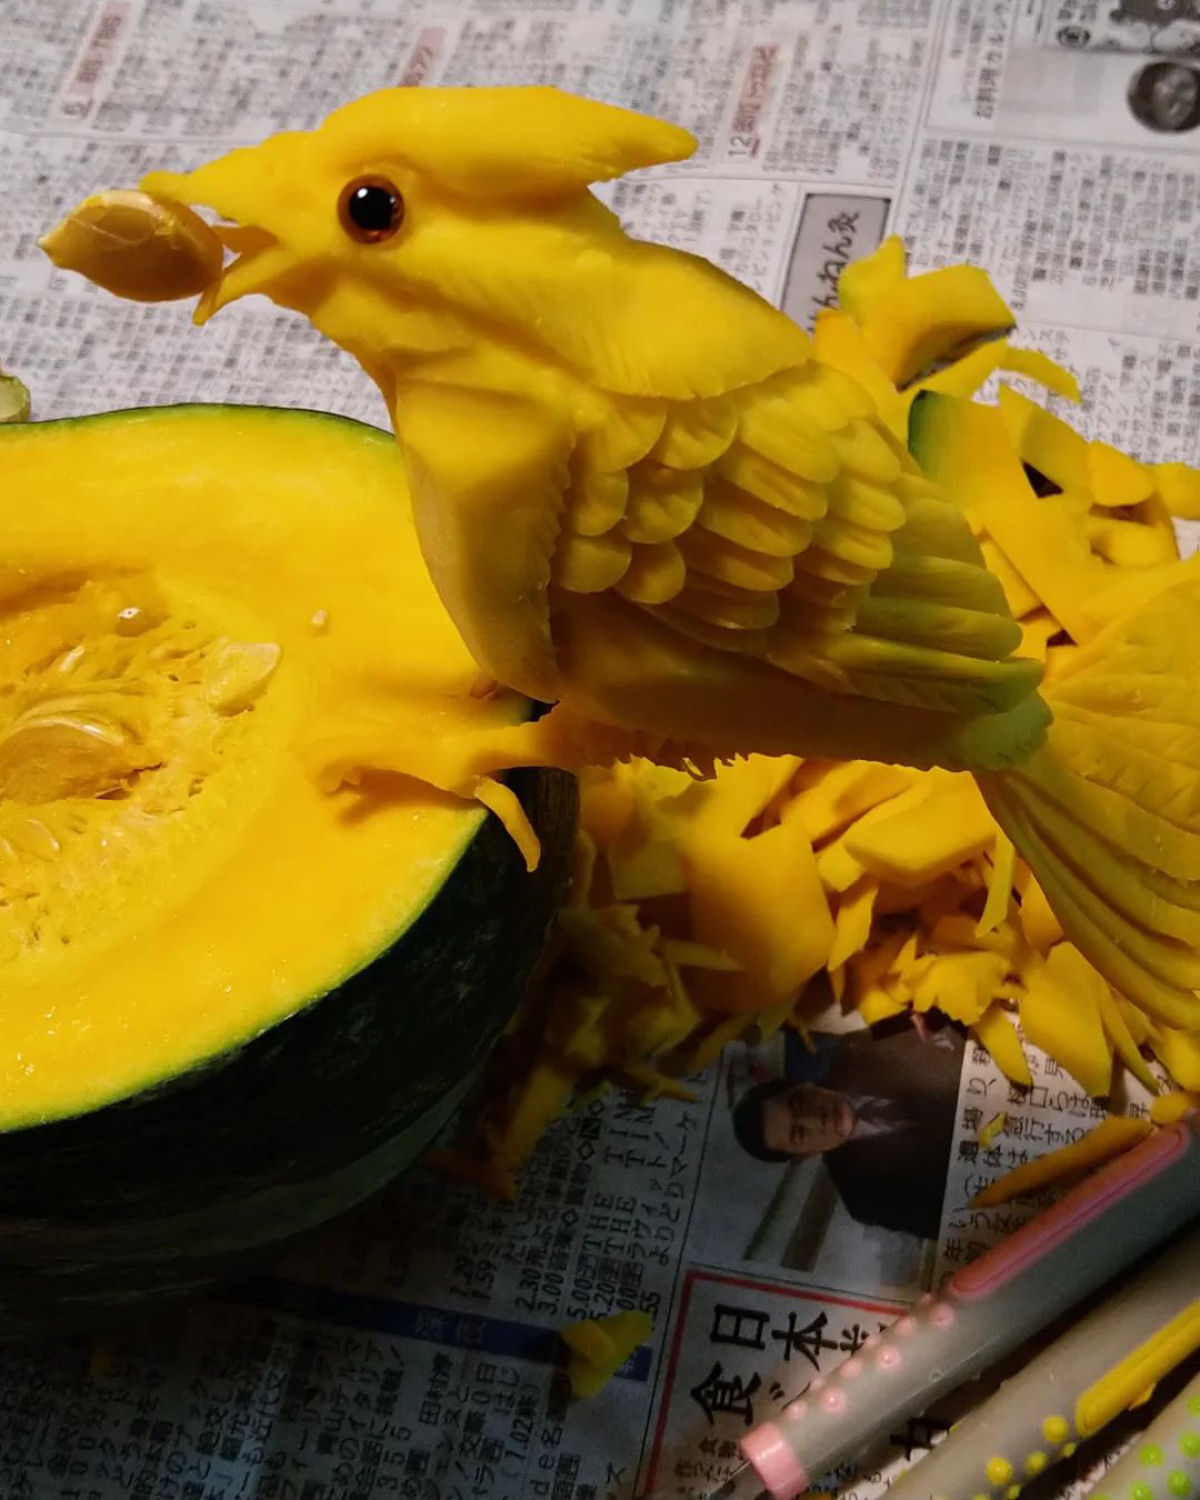 Escultor japons transforma frutas e legumes  em esculturas comestveis brilhantes 07